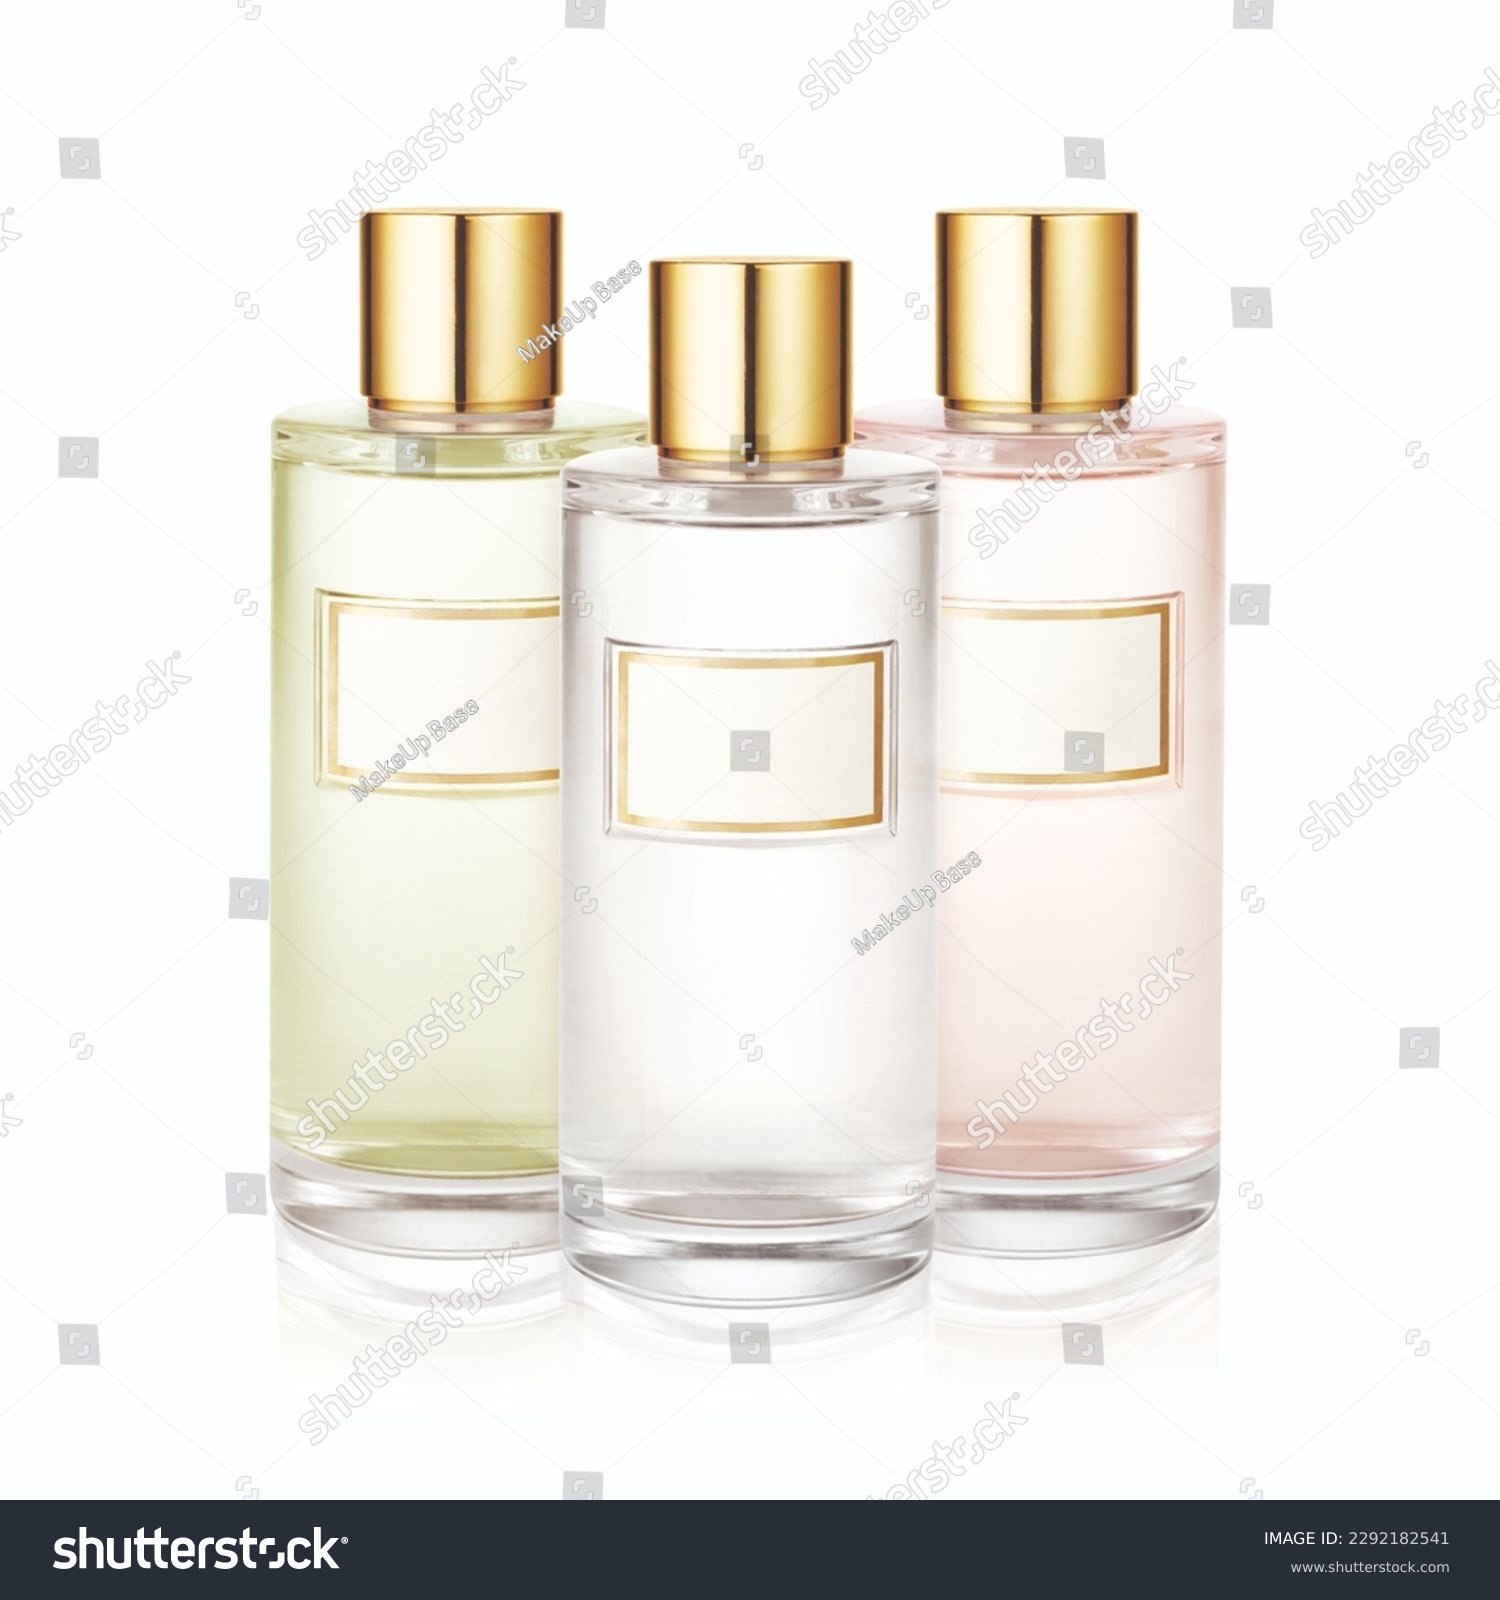 Three Bottle of Perfume Spray. Women's Eau De Parfum in Beautiful Glass Bottle and Gold Cap Isolated on White. Modern Luxury Parfum De Toilette. Fragrance for Women #2292182541